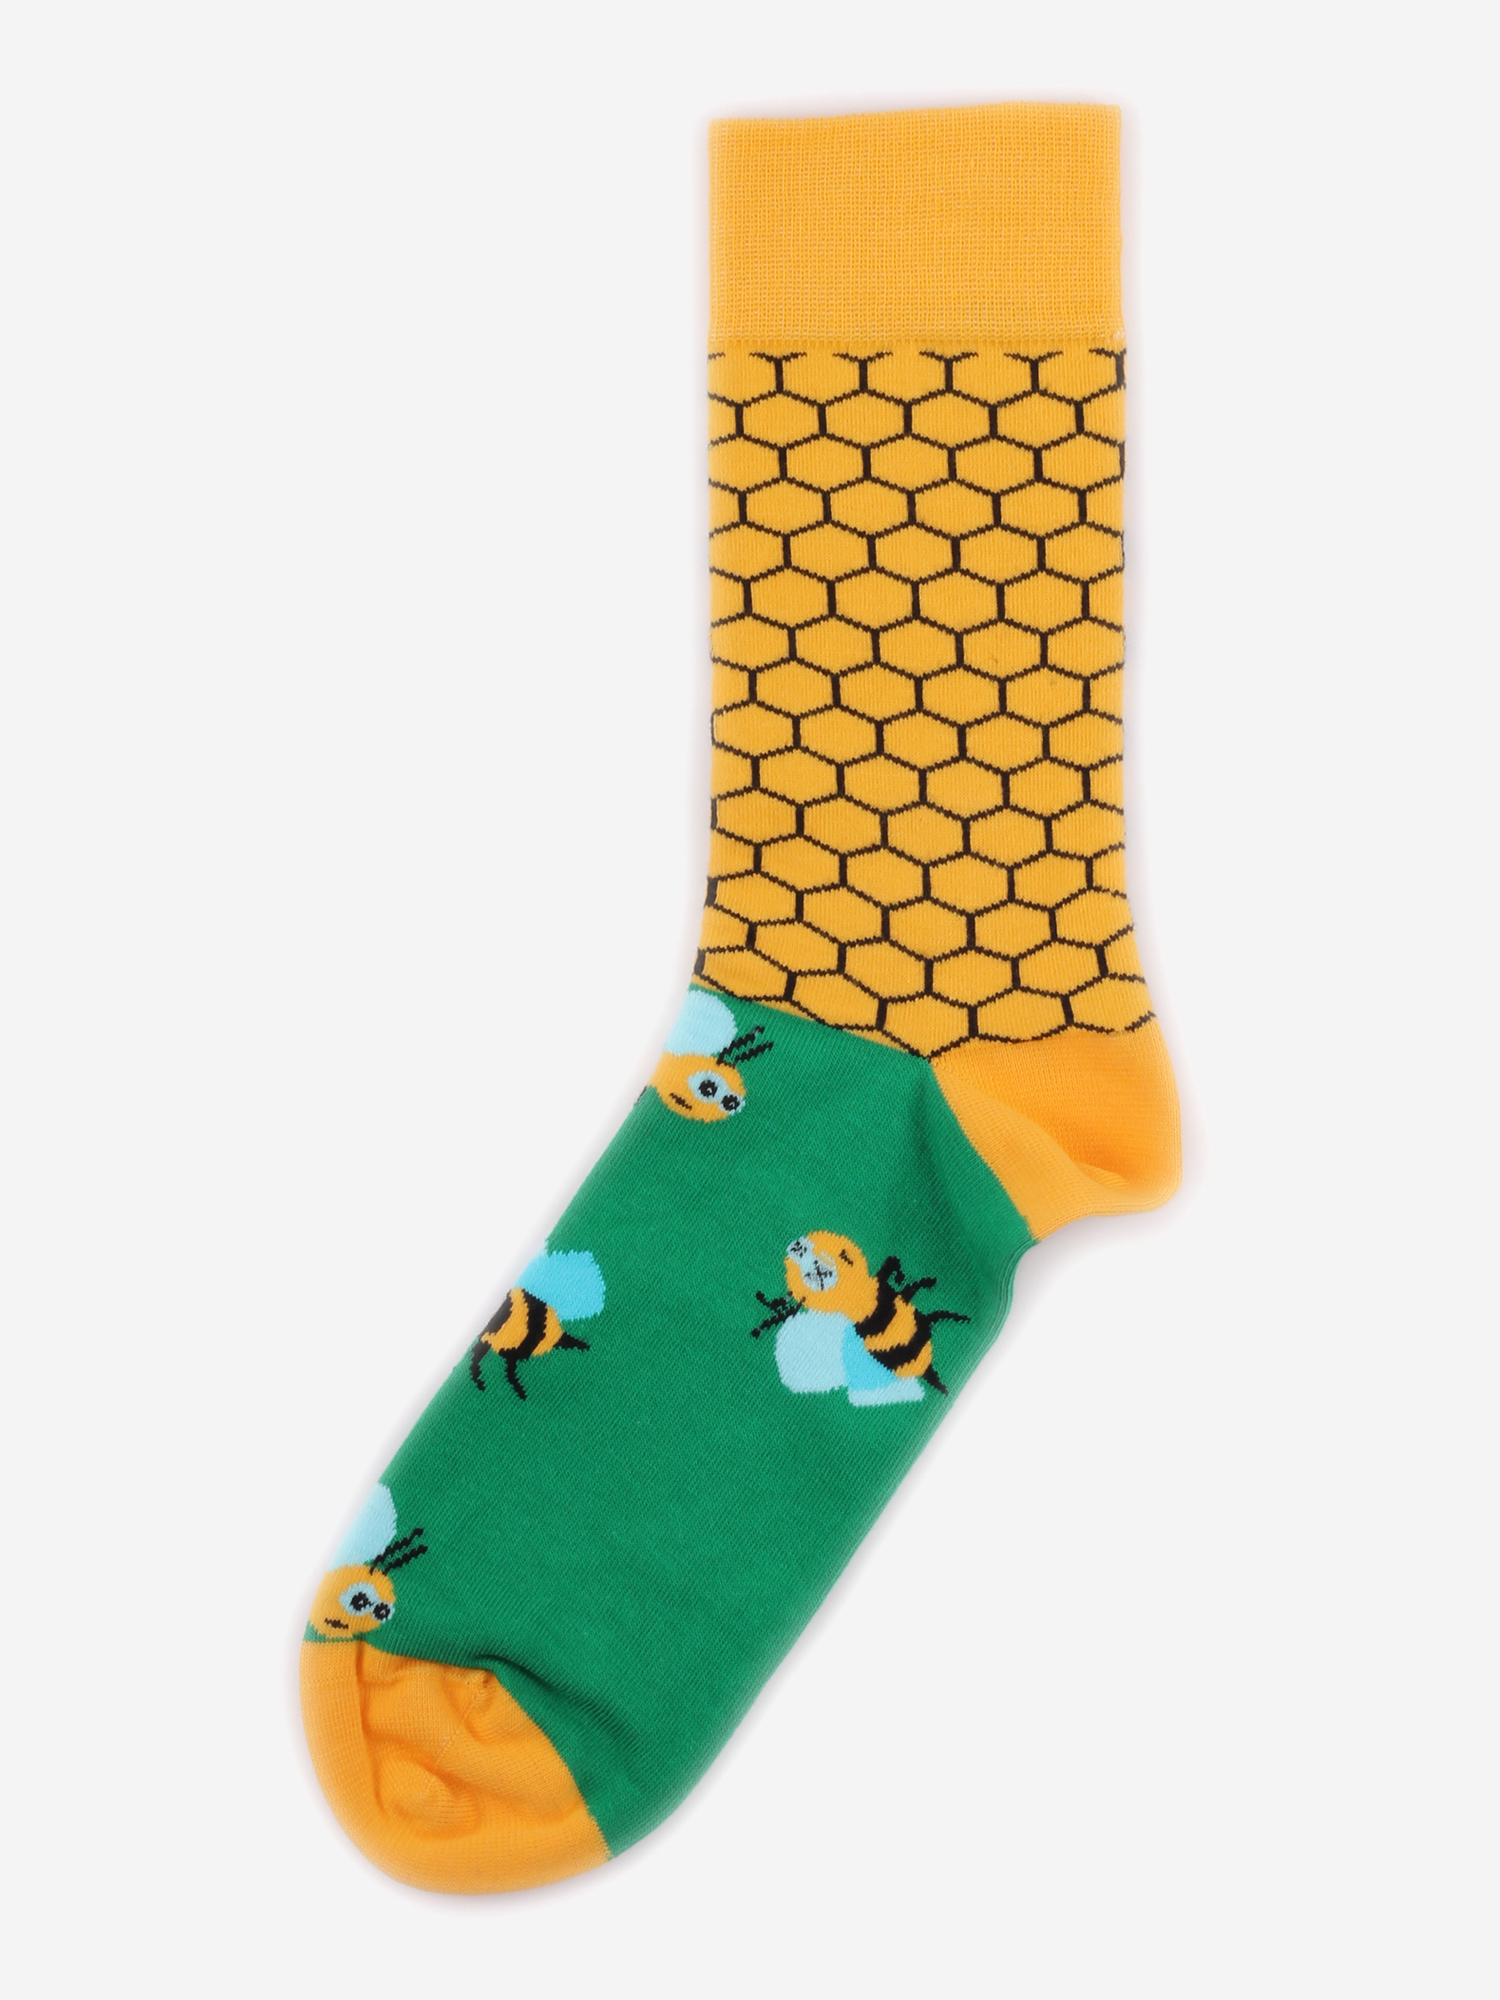 Носки с пчёлами Burning Heels - Bees - Green/Yellow, Желтый сукно gorina granito tournament 2000 yellow green 60м 197cm